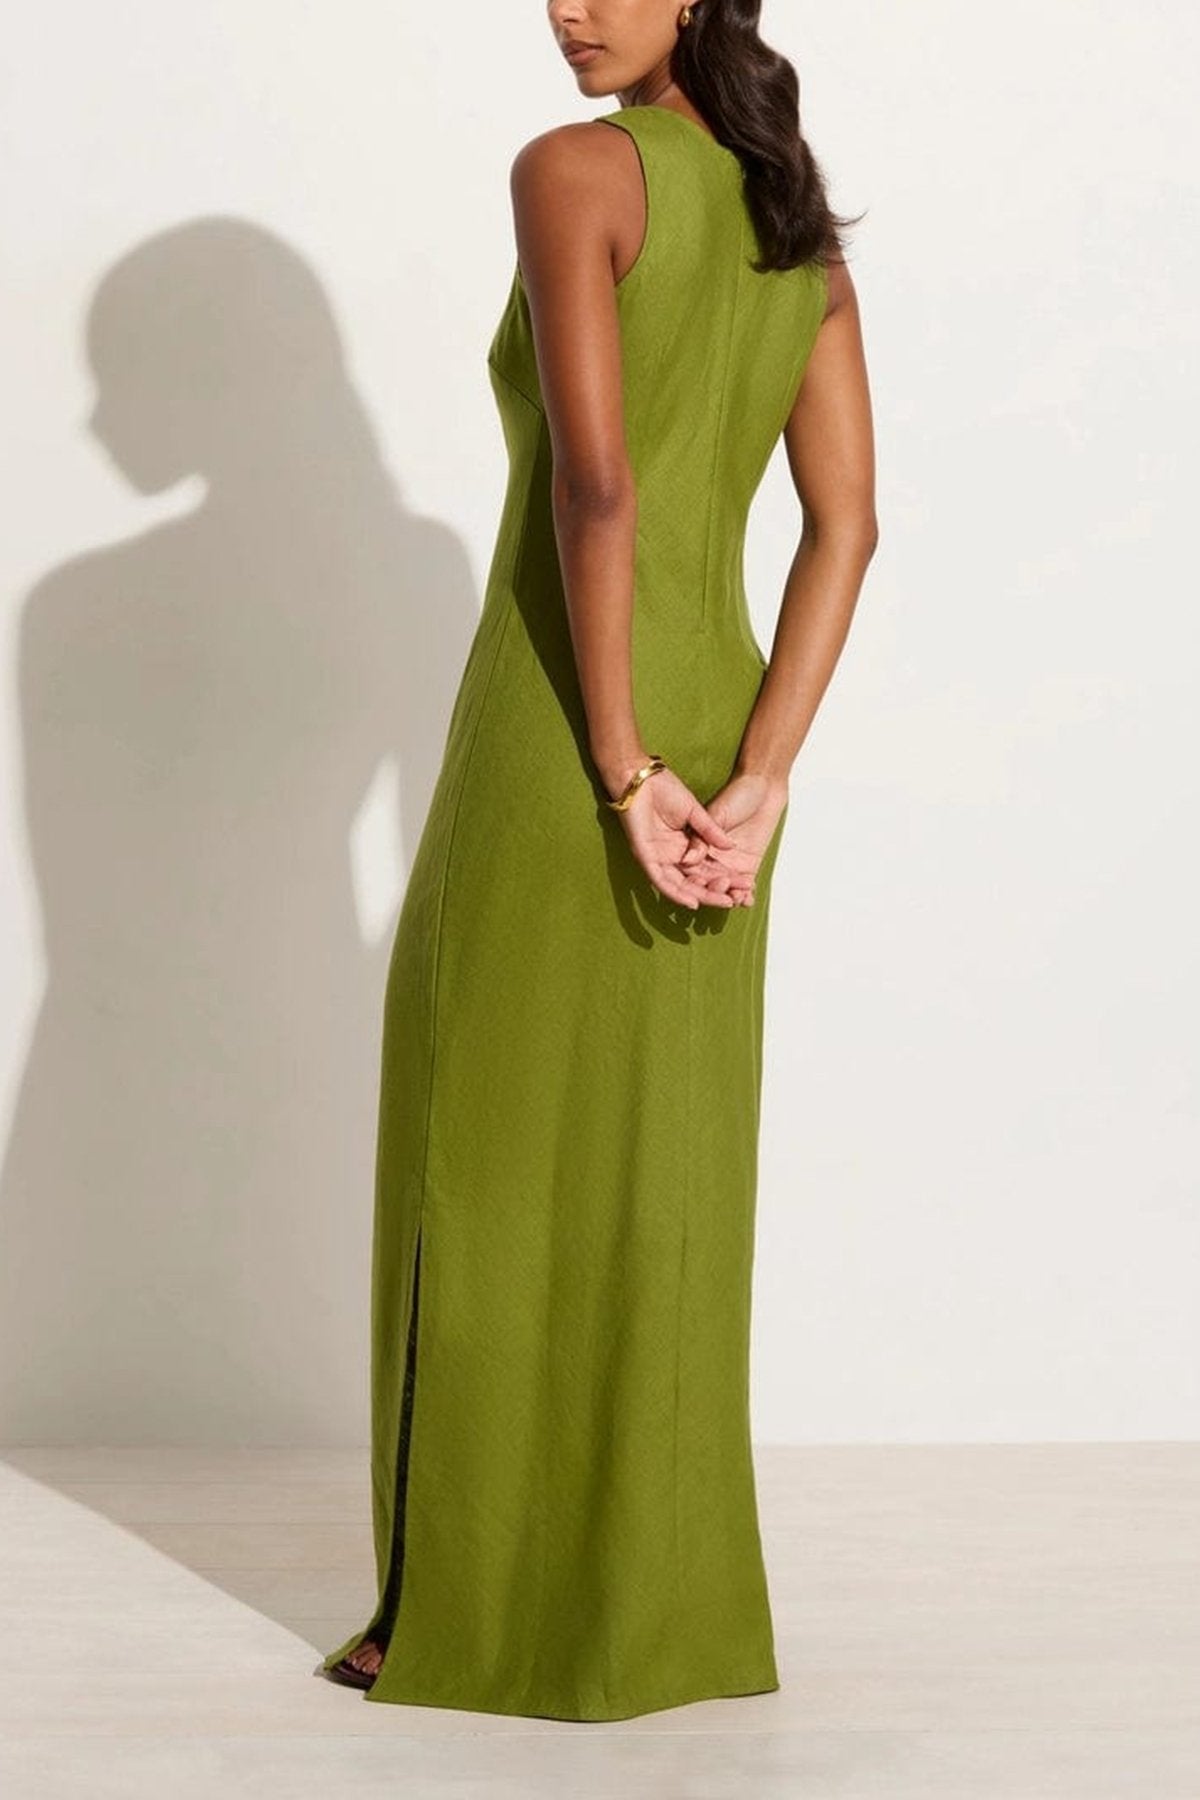 Valenza Maxi Dress in Palm Green - shop-olivia.com